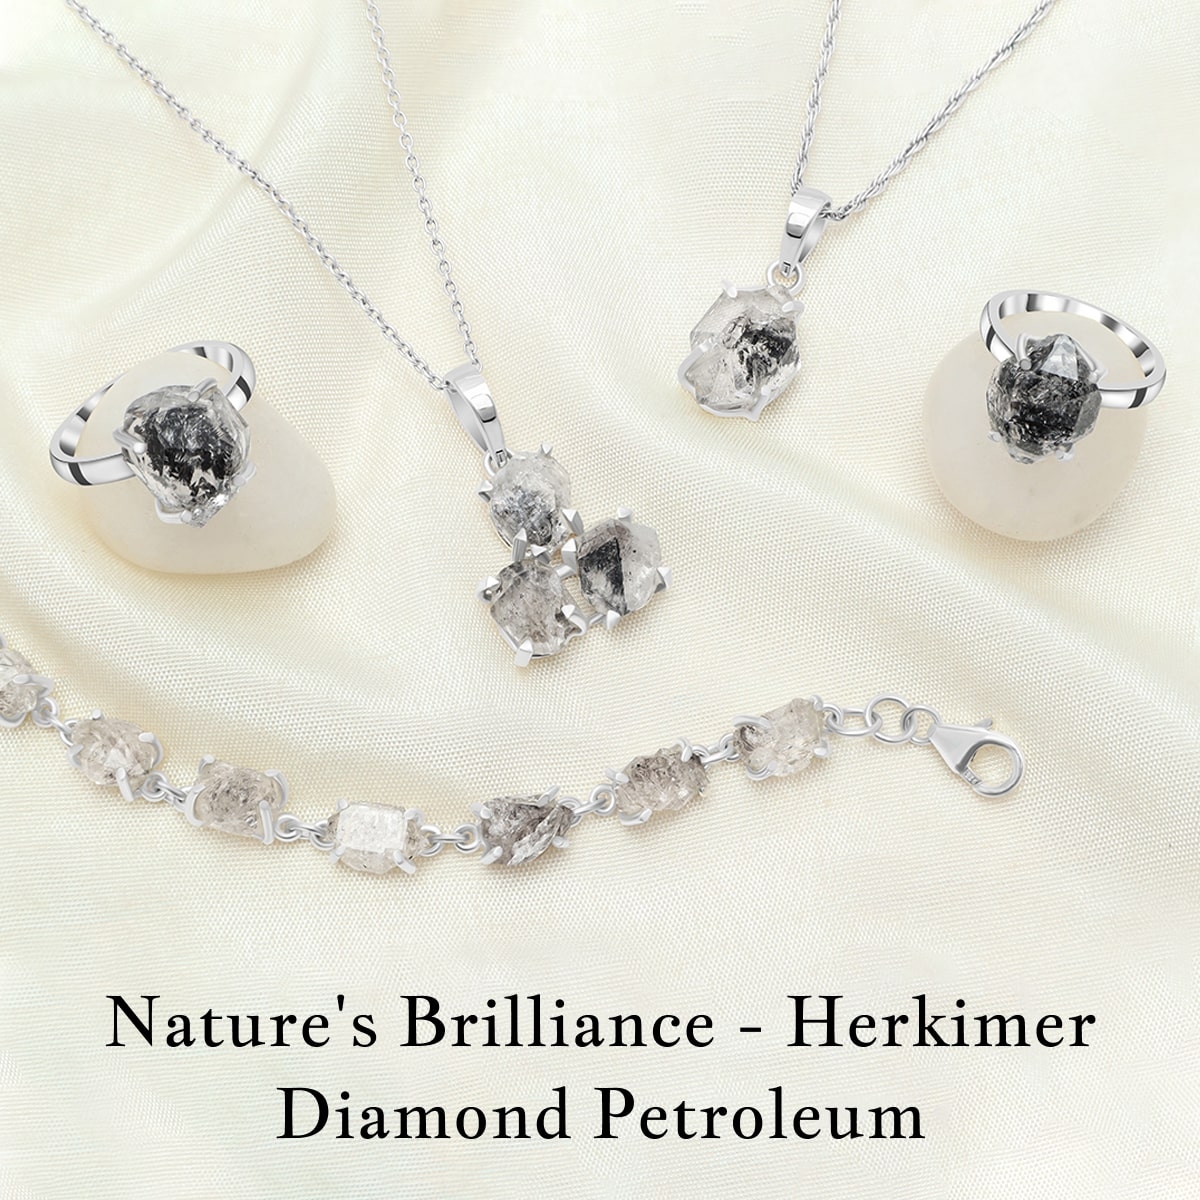 Herkimer Diamond Petroleum